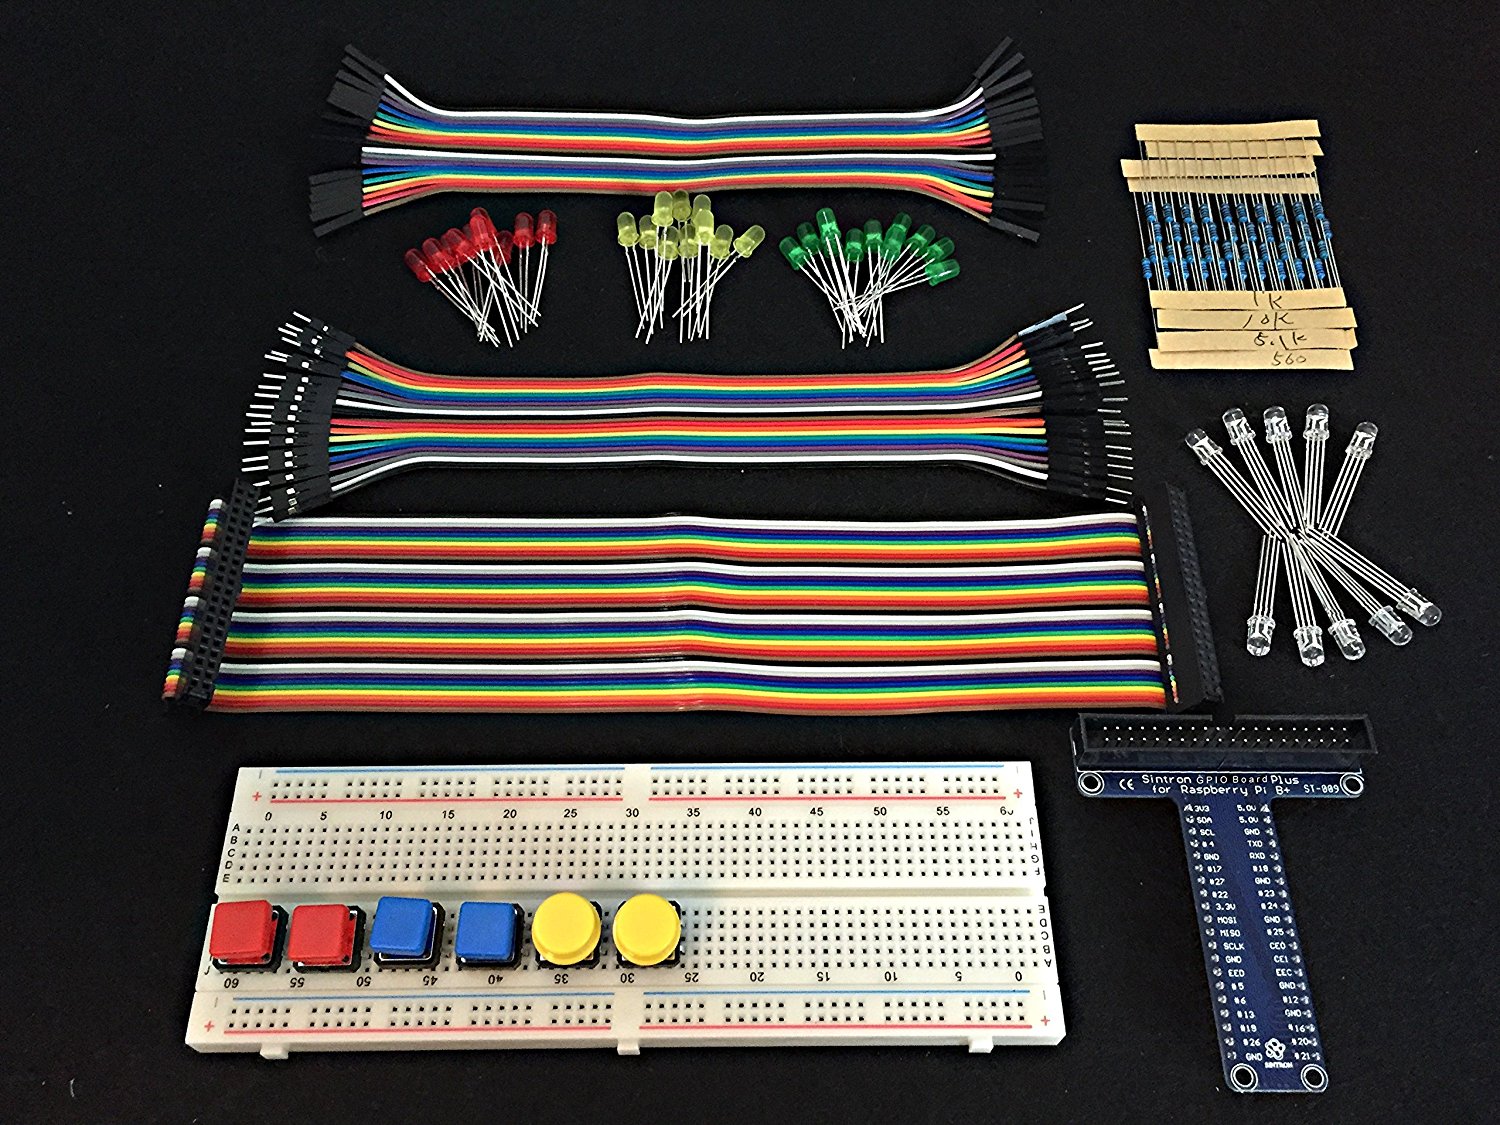 Raspberry Pi 2 B Kits+Breadboard+40Pin Rainbow Cable+T Type GPIO Extension  Board